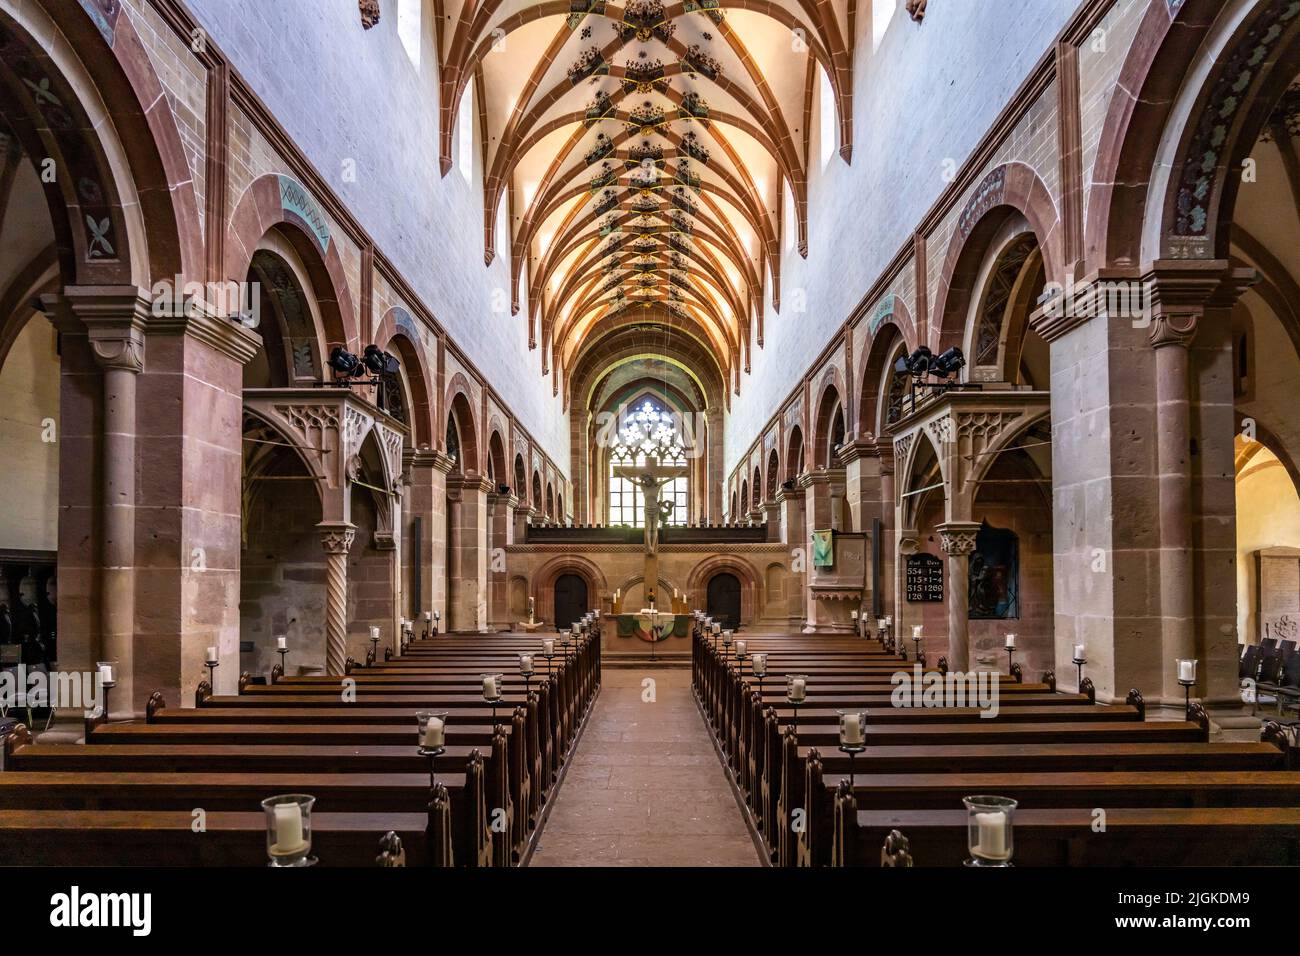 Innenraum der Klosterkirche, Kloster Maulbronn, Maulbronn, Baden-Württemberg, Deutschland |  Maulbronn Monastery Abbey church interior, Maulbronn, Bad Stock Photo